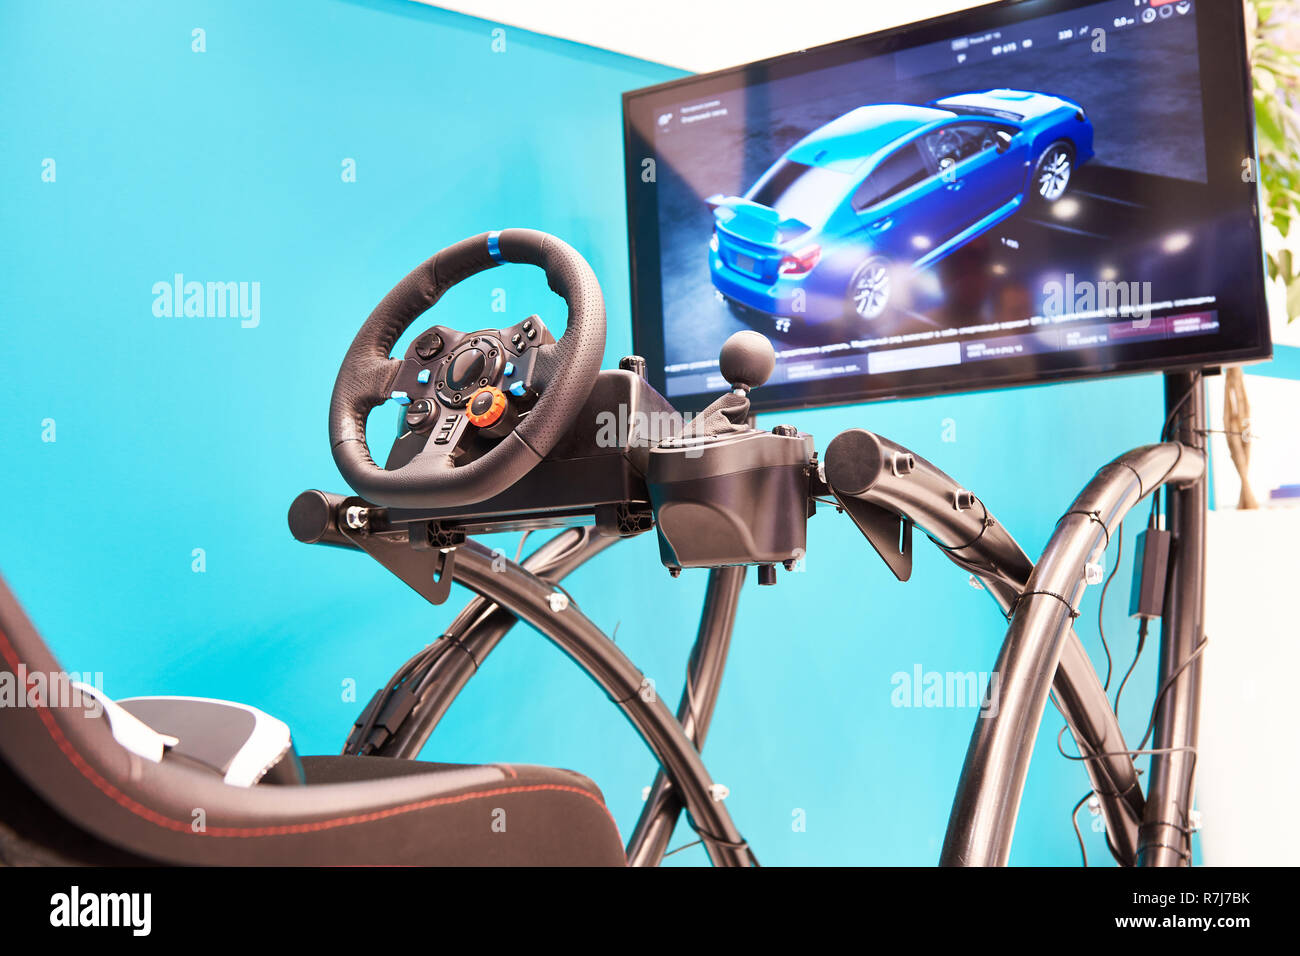 Modern racing simulator and monitor Stock Photo